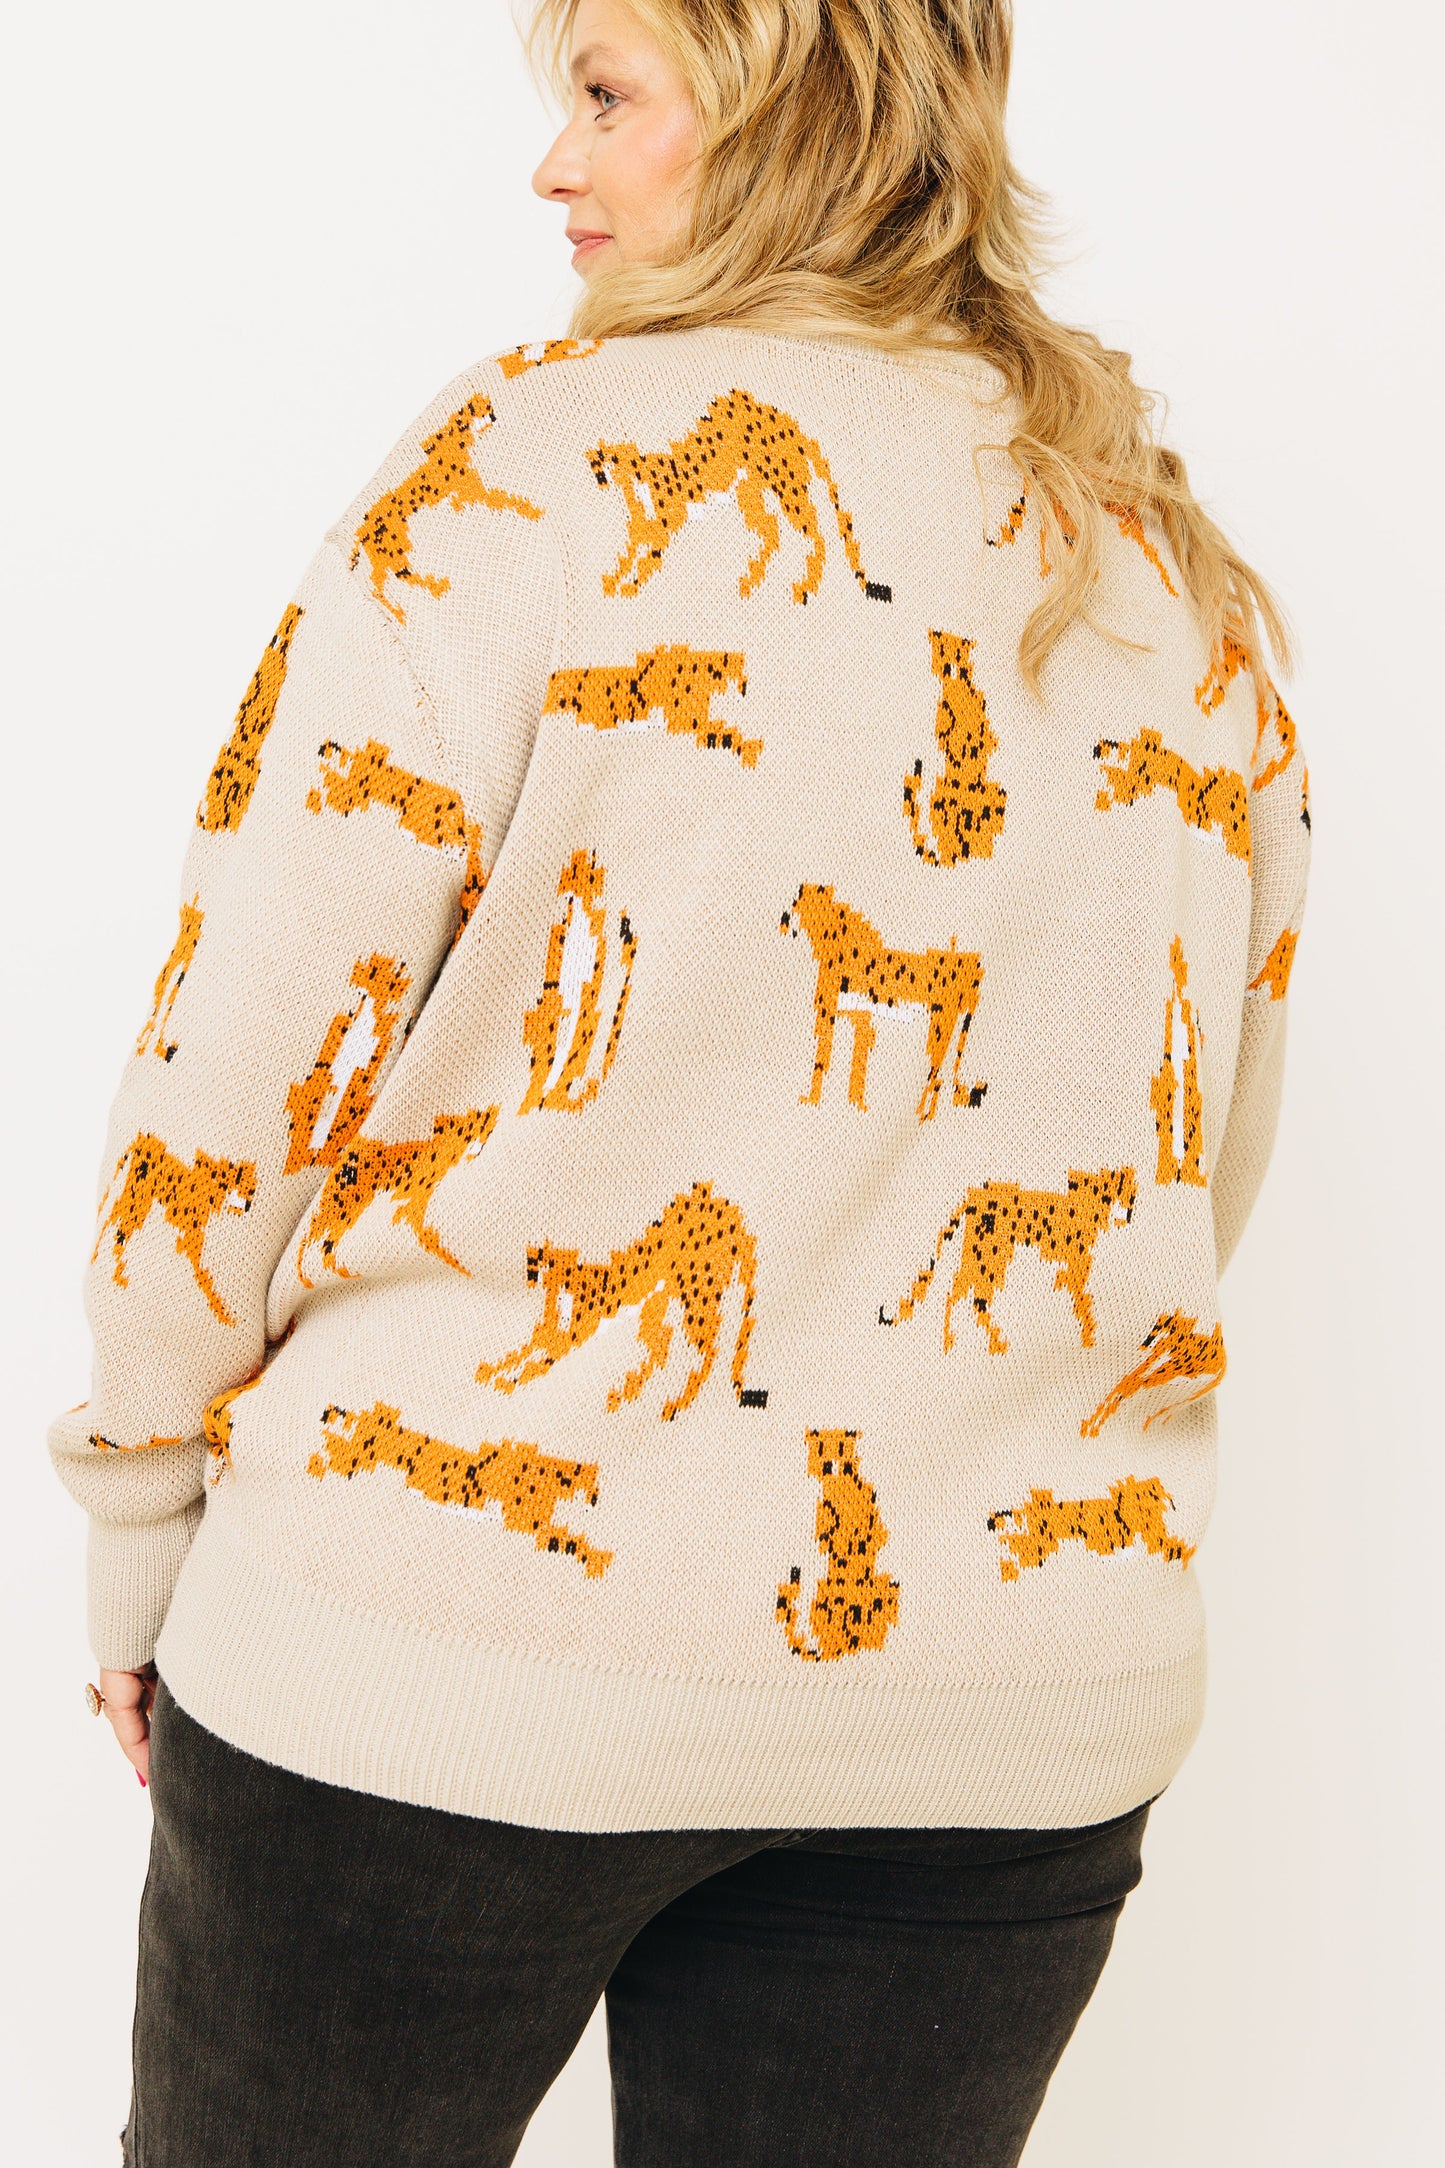 Citrus Safari Cheetah Print Sweater (S-3XL)